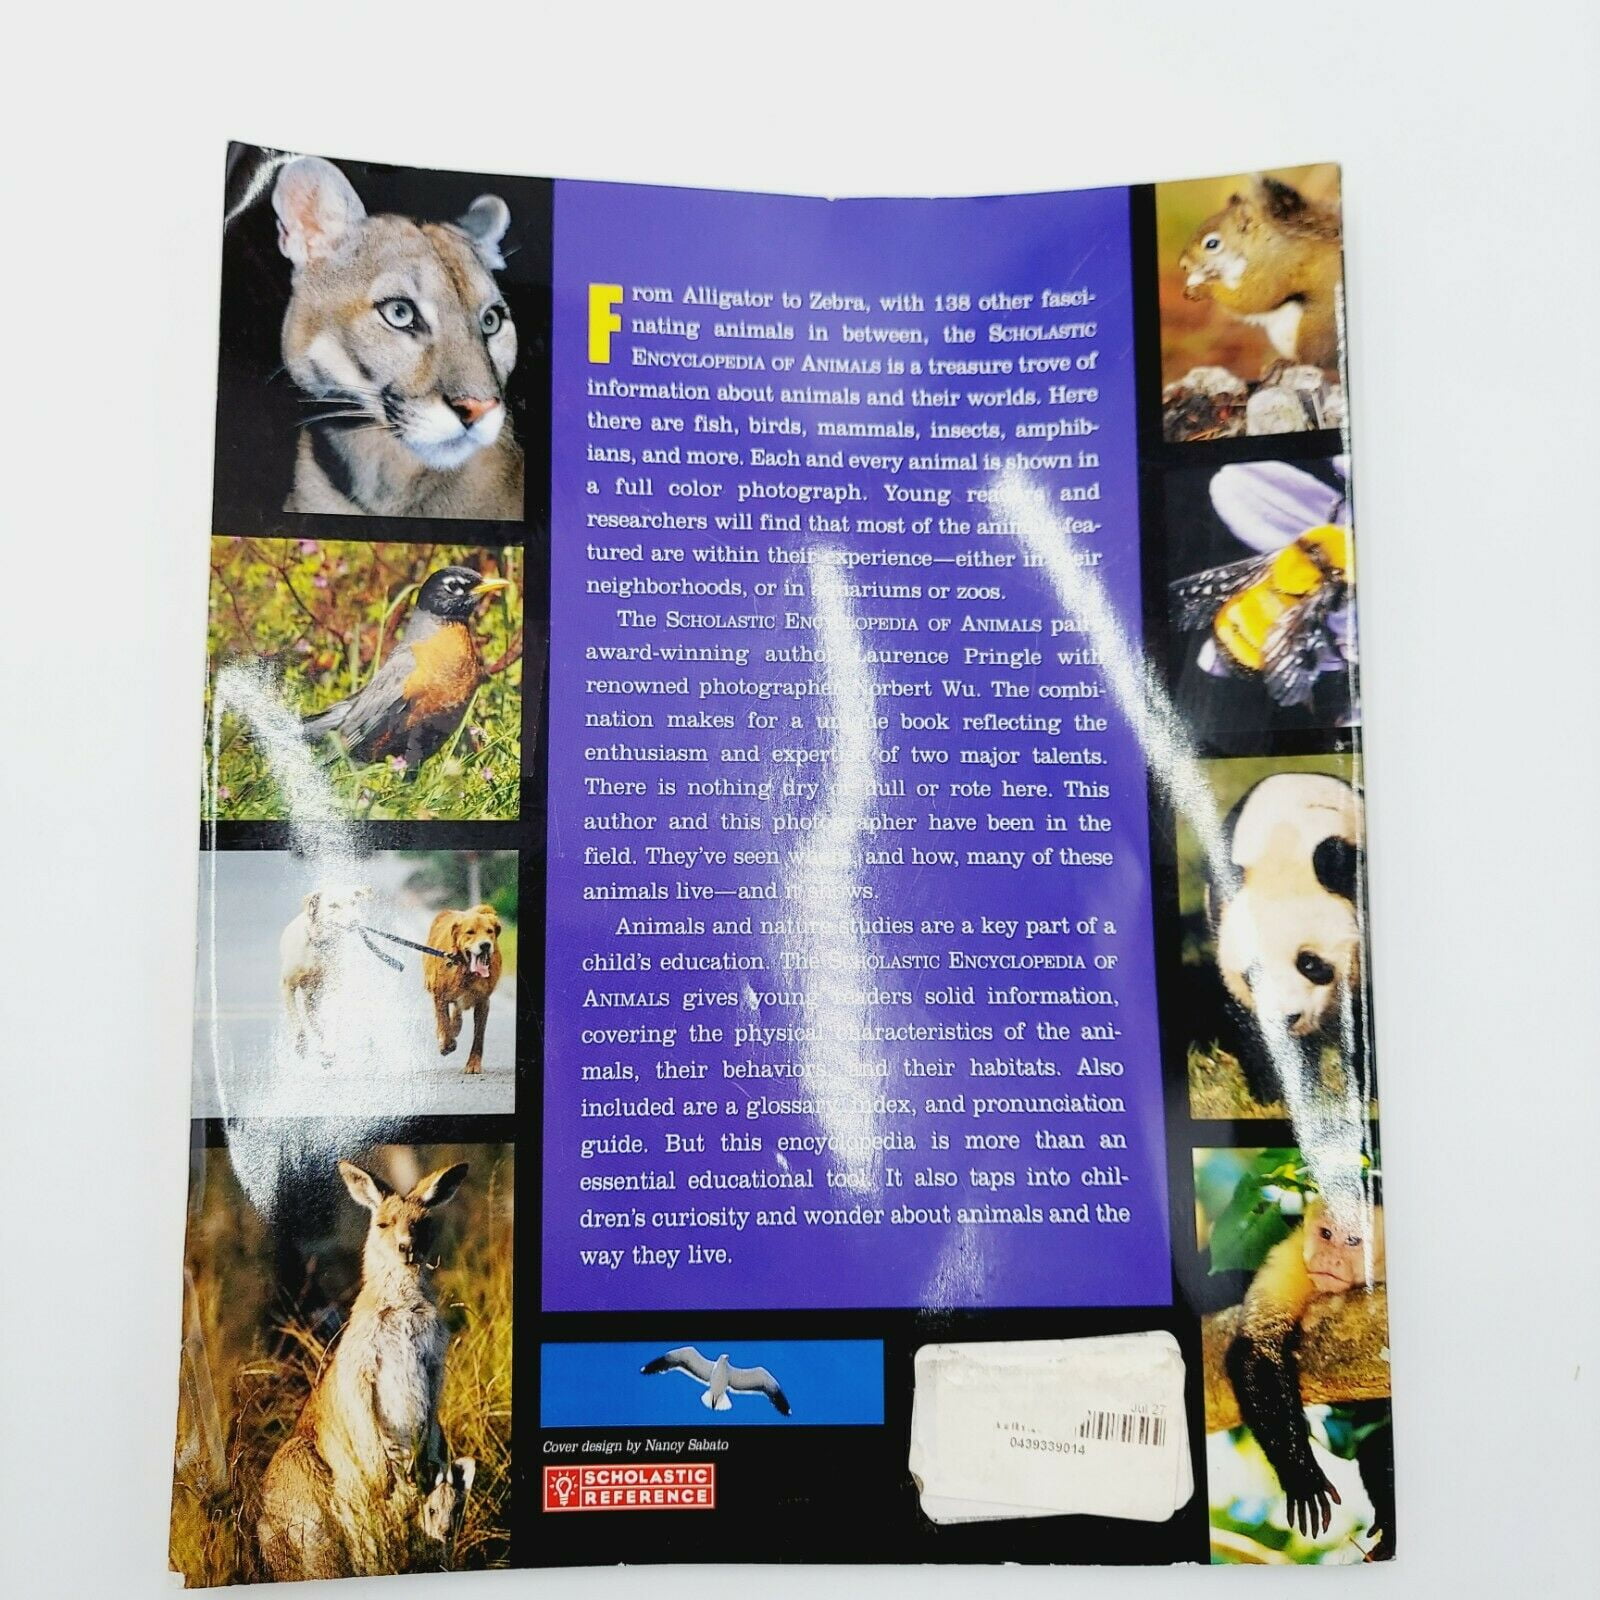 Scholastic Encyclopedia of Animals 